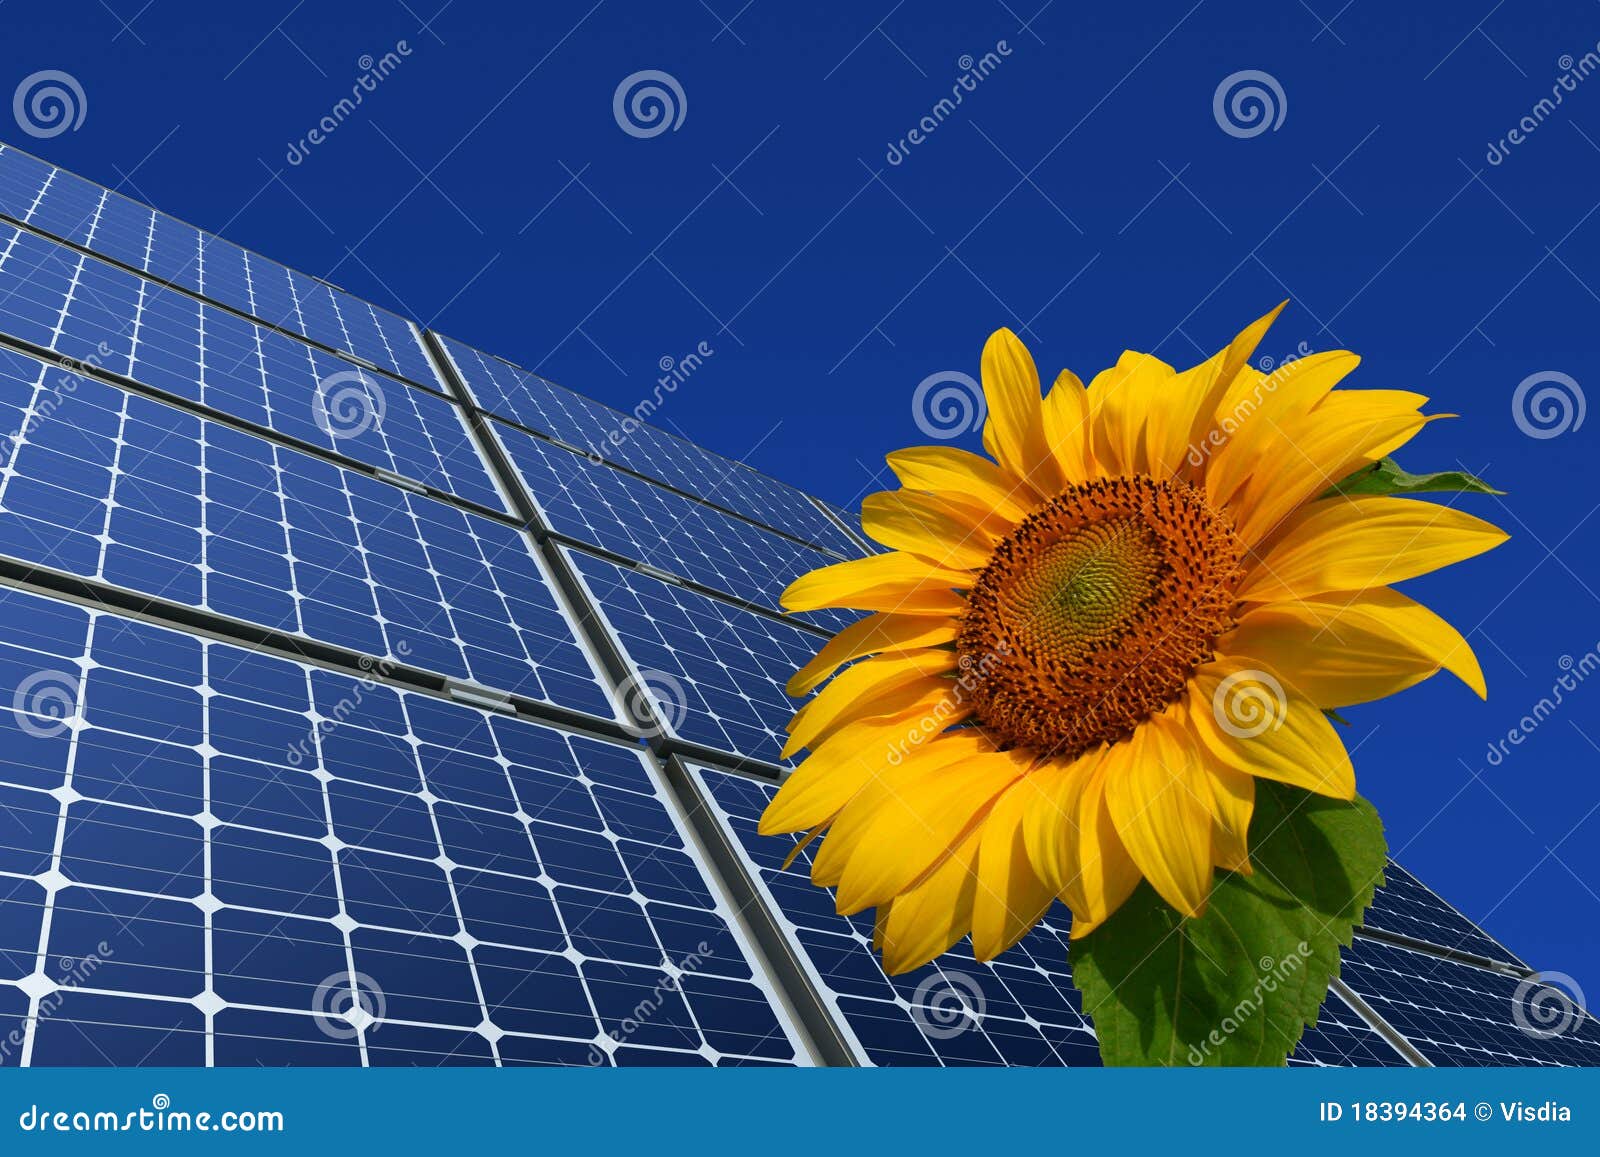 mono-crystalline solar panels and sunflower